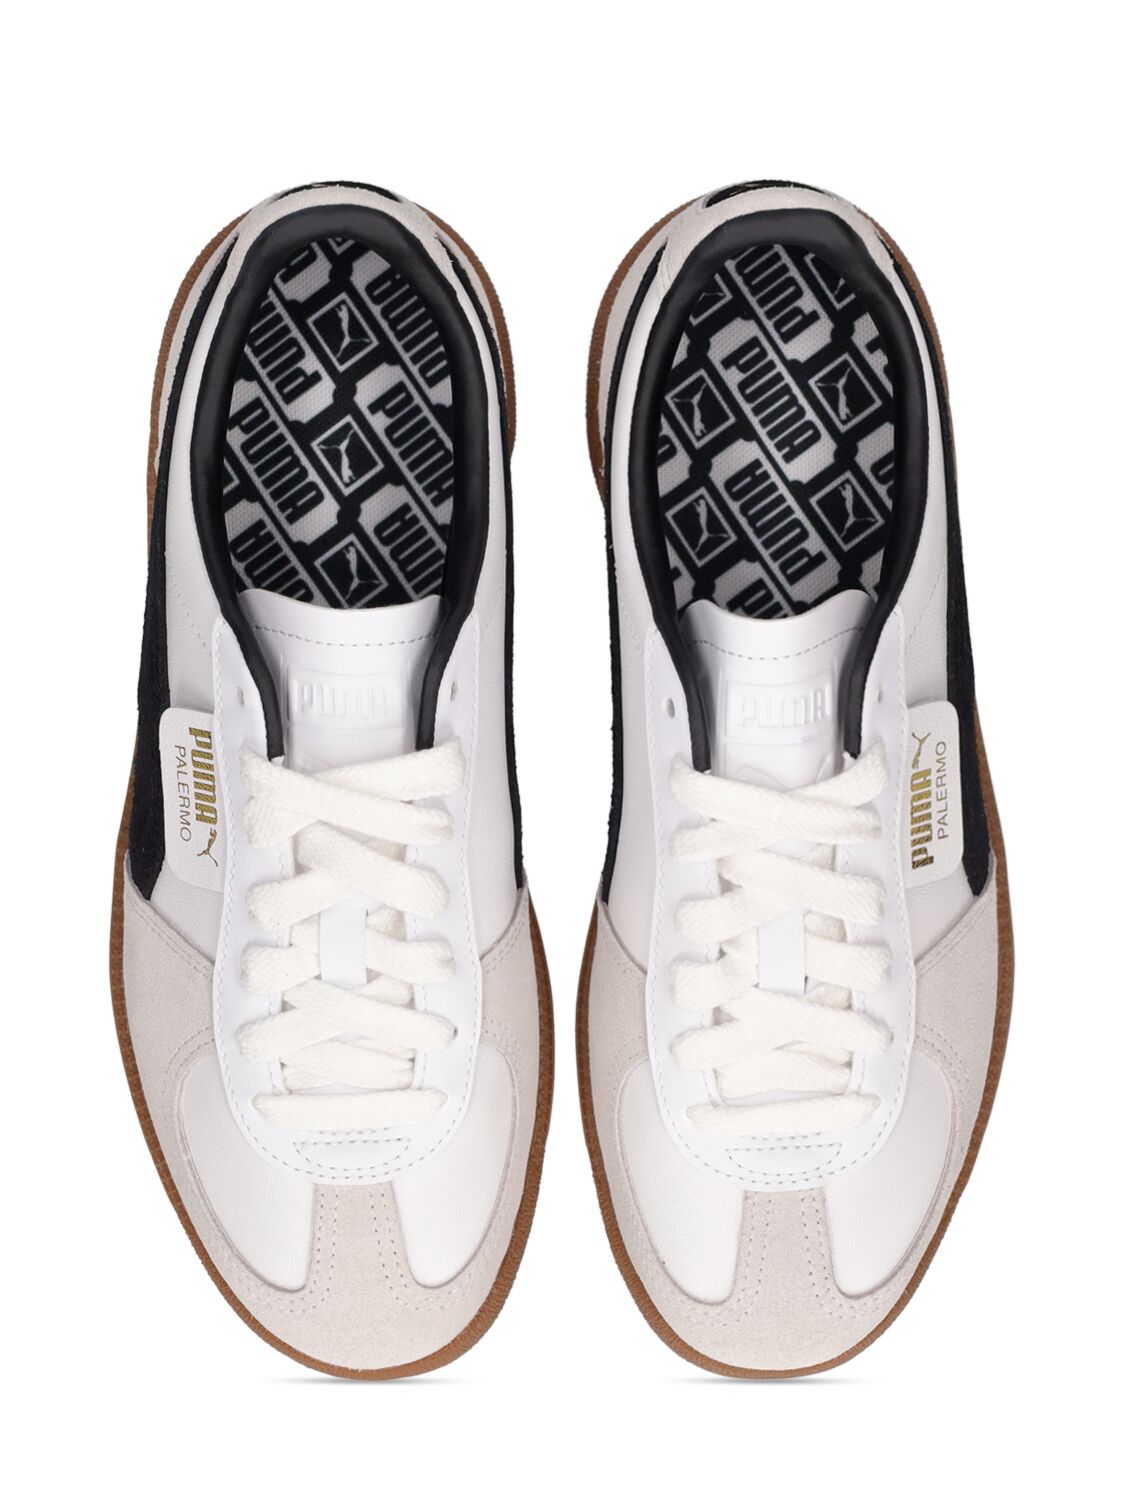 Men's shoes Puma Palermo Leather Puma White-Vapor Gray-Gum